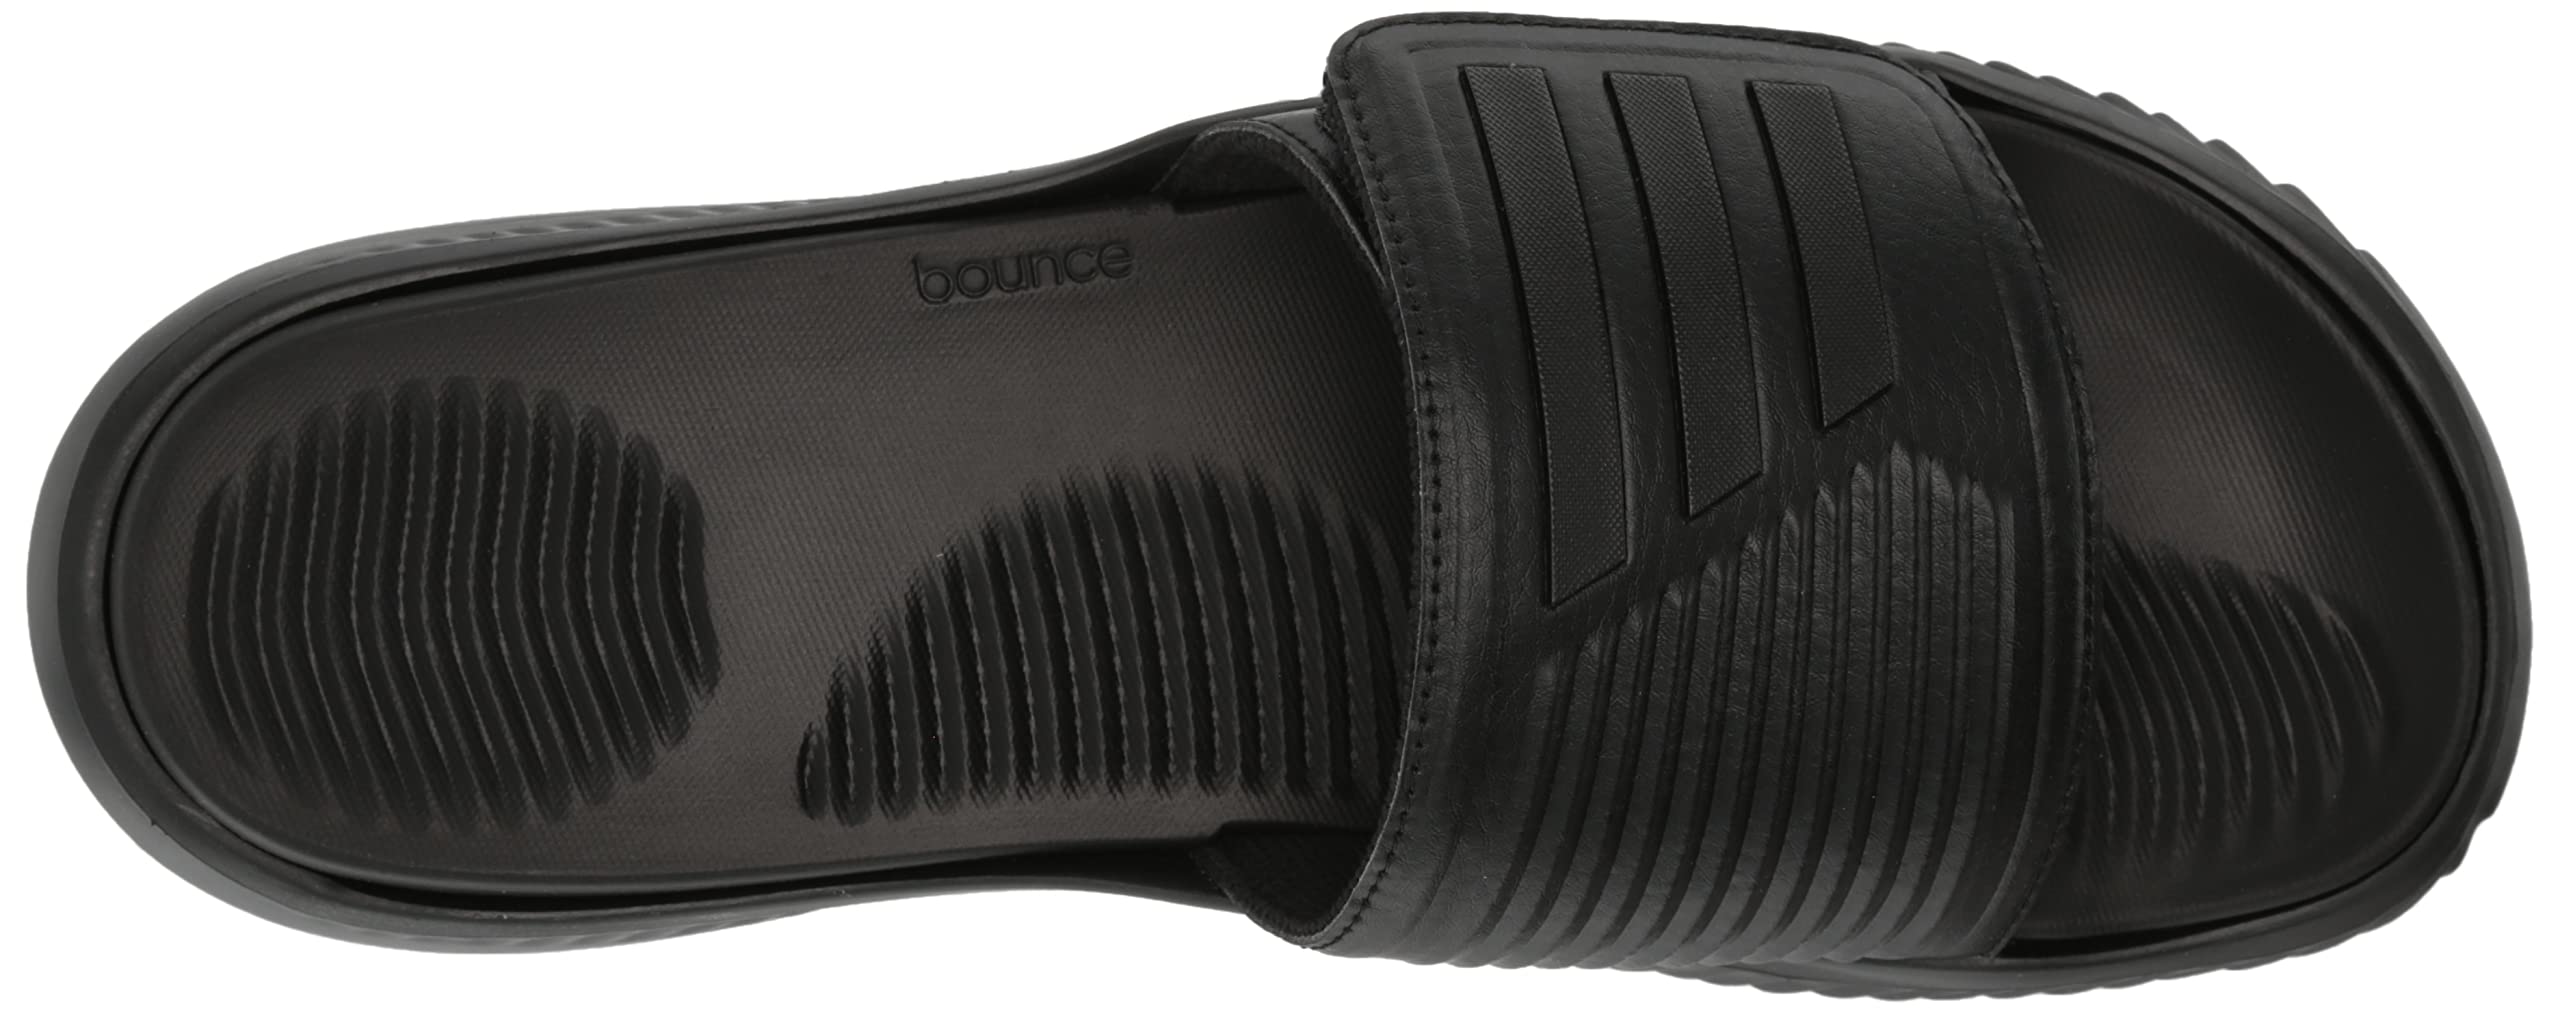 adidas Unisex-Adult Alphabounce 2.0 Slides Sandal